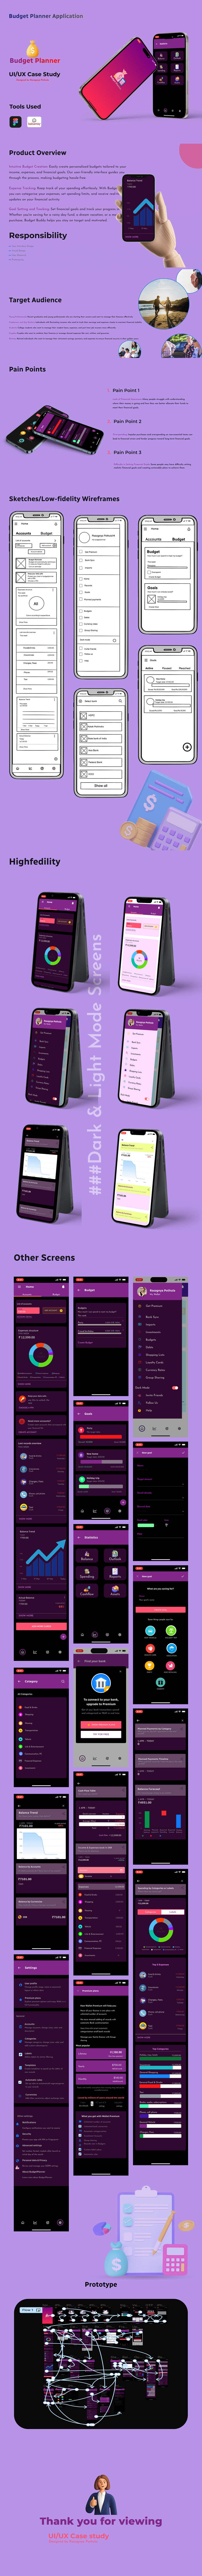 Figma UI/UX ui design Mobile app user interface landing page user experience app design Case Study design